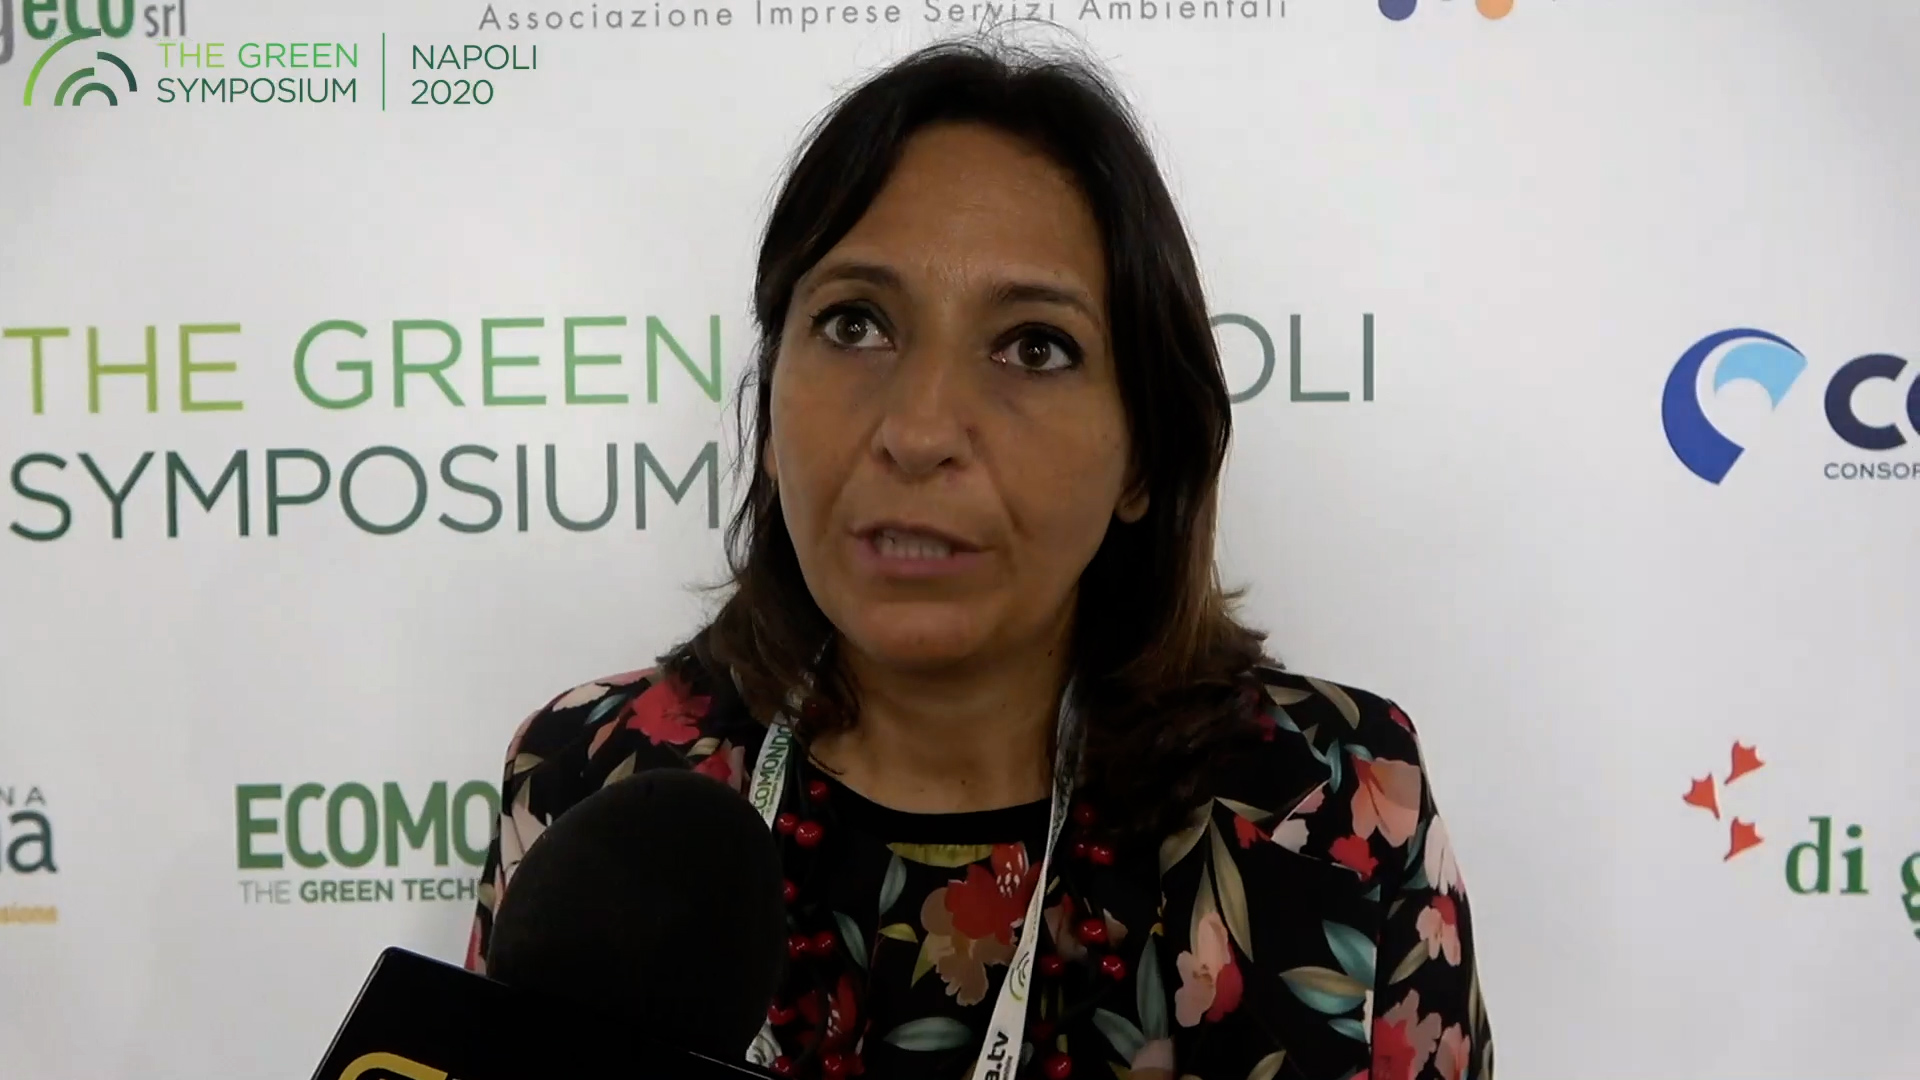 Green Symposium 2021: intervista a Valeria Frittelloni - Ispra